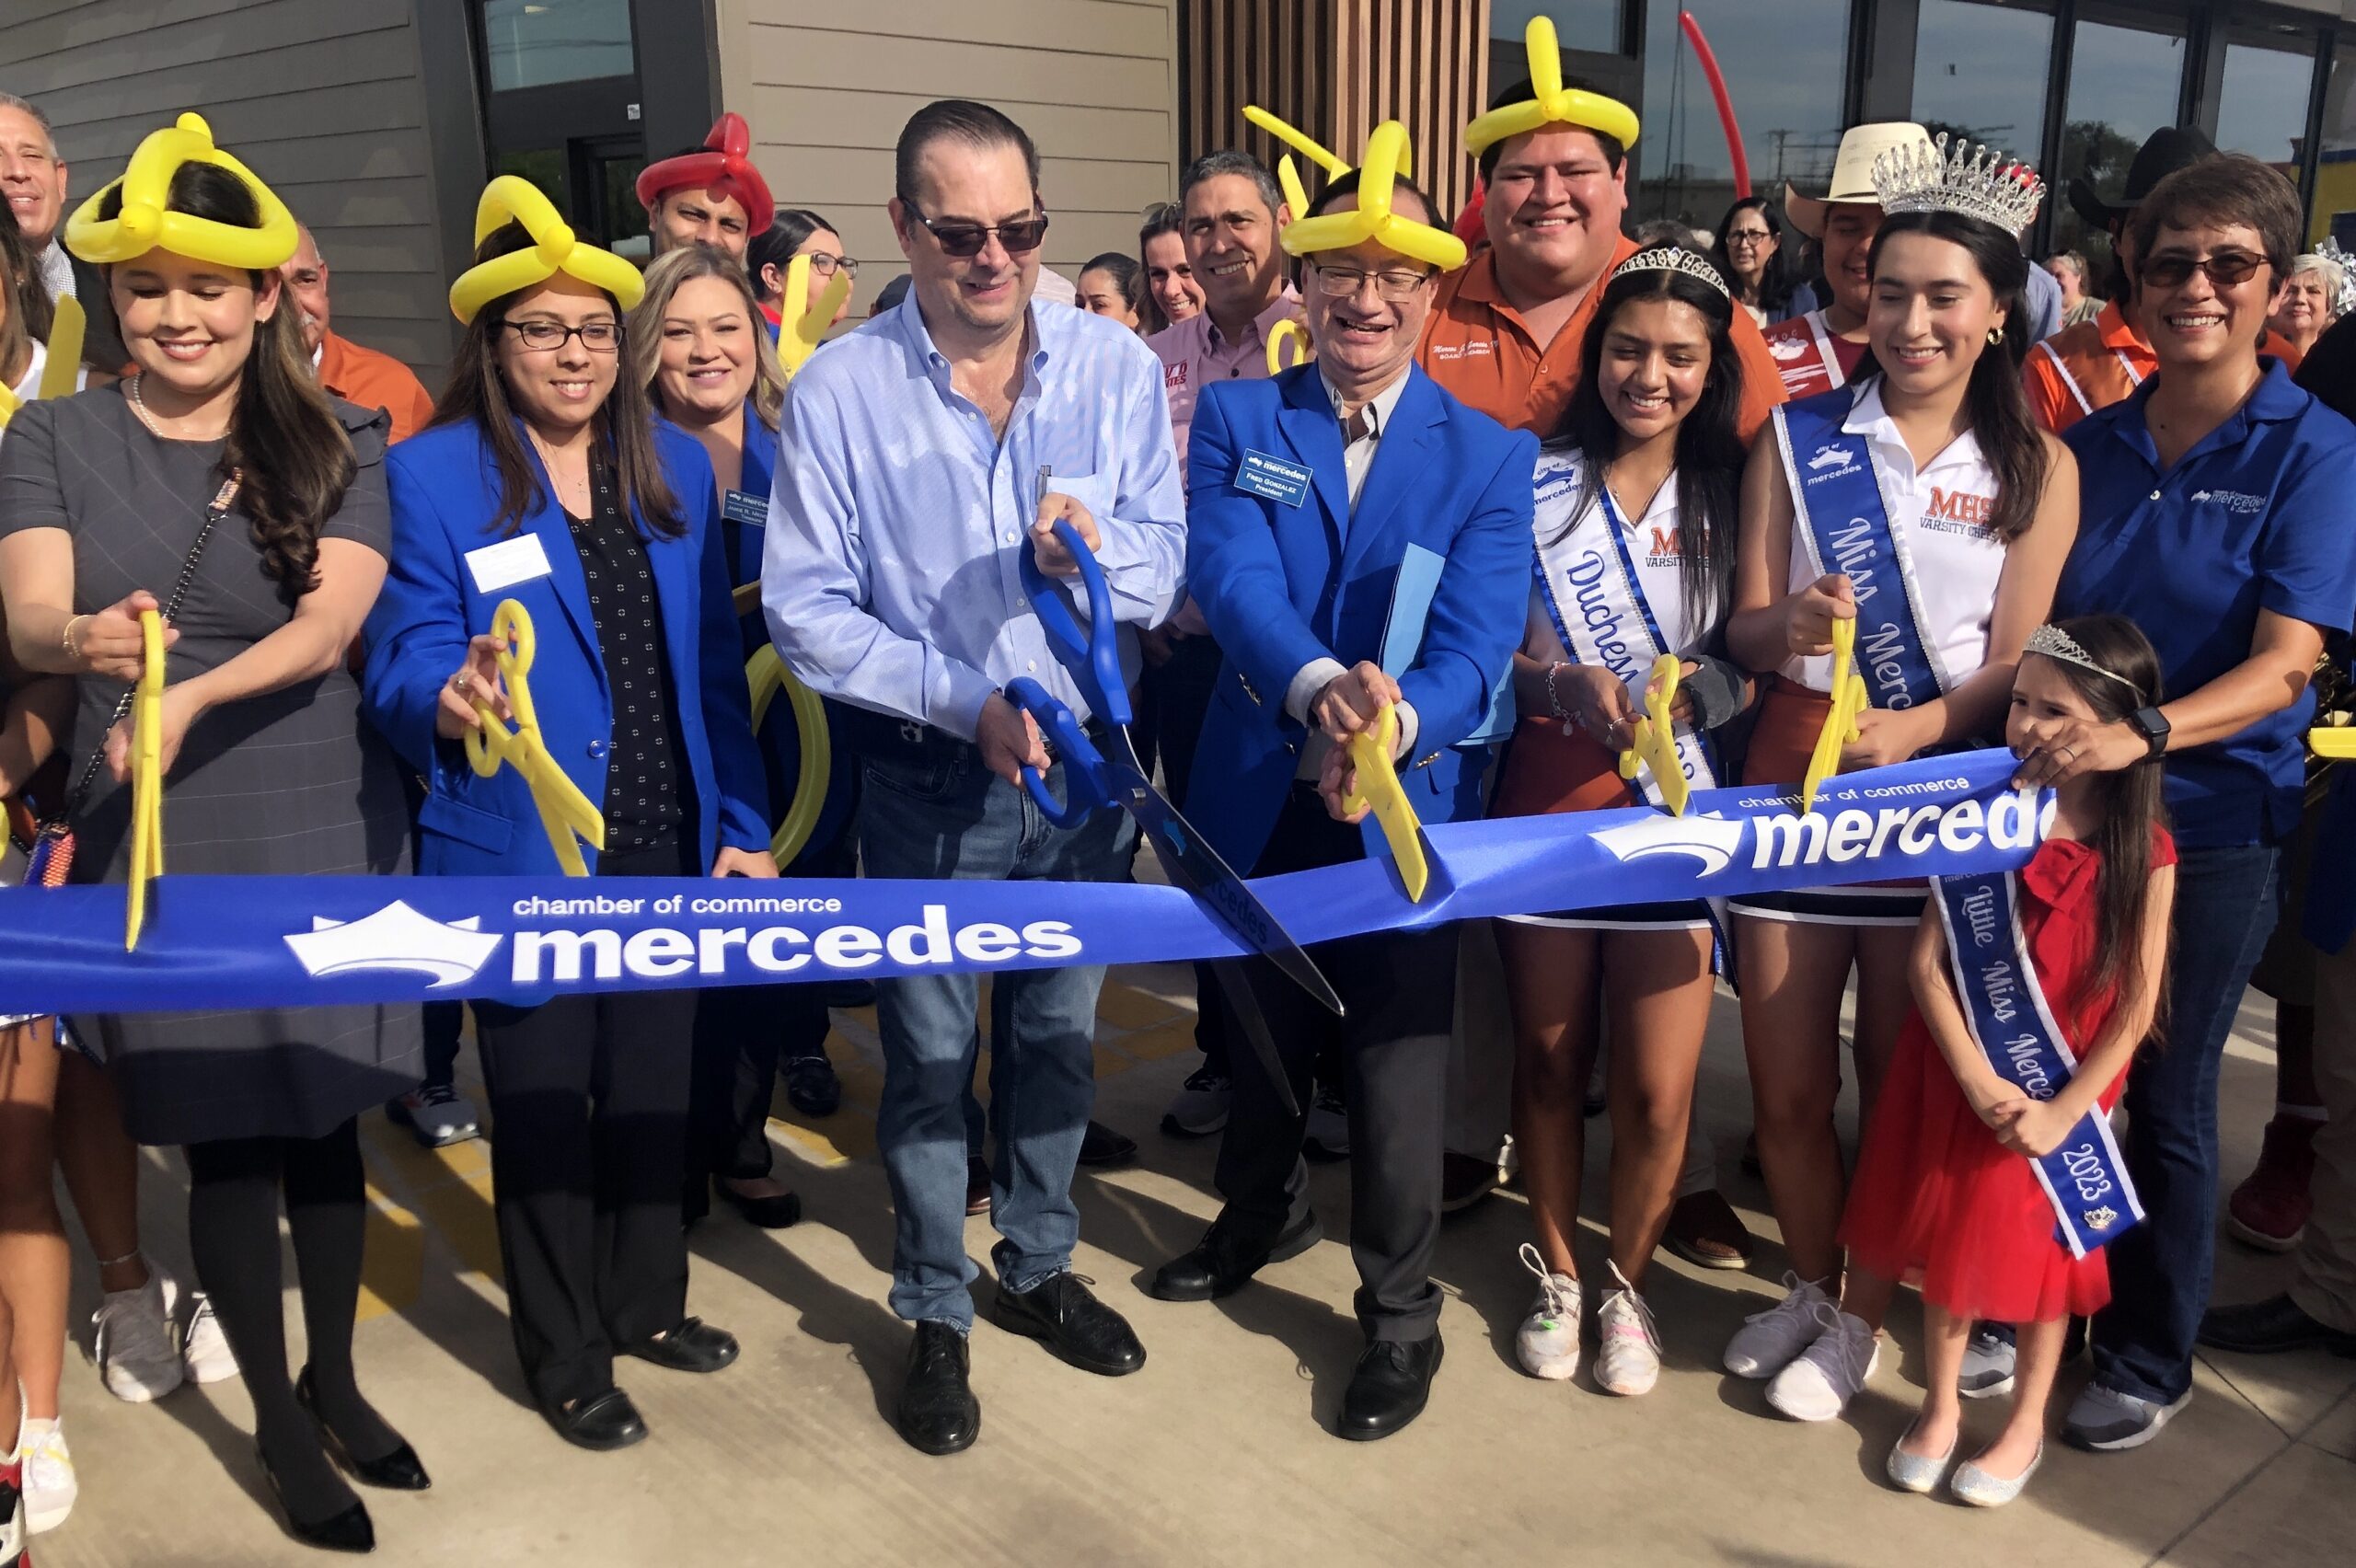 Mercedes Celebrates Opening of McDonald’s